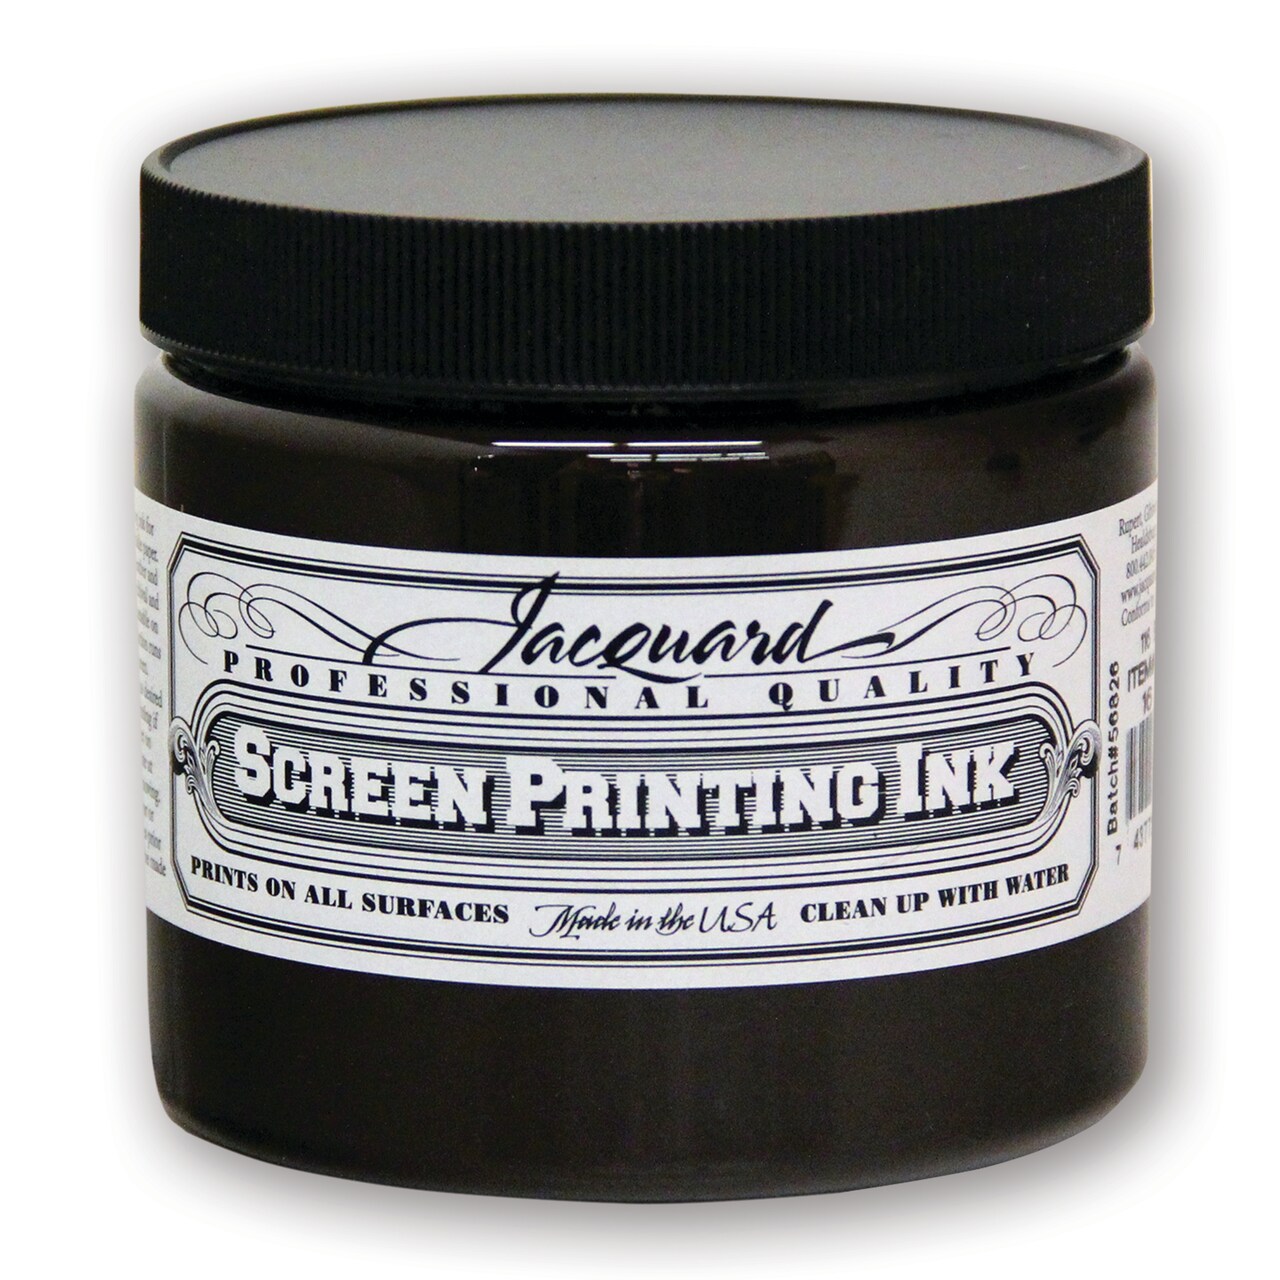 Jacquard Professional Screen Printing Ink, 16 oz., Brown